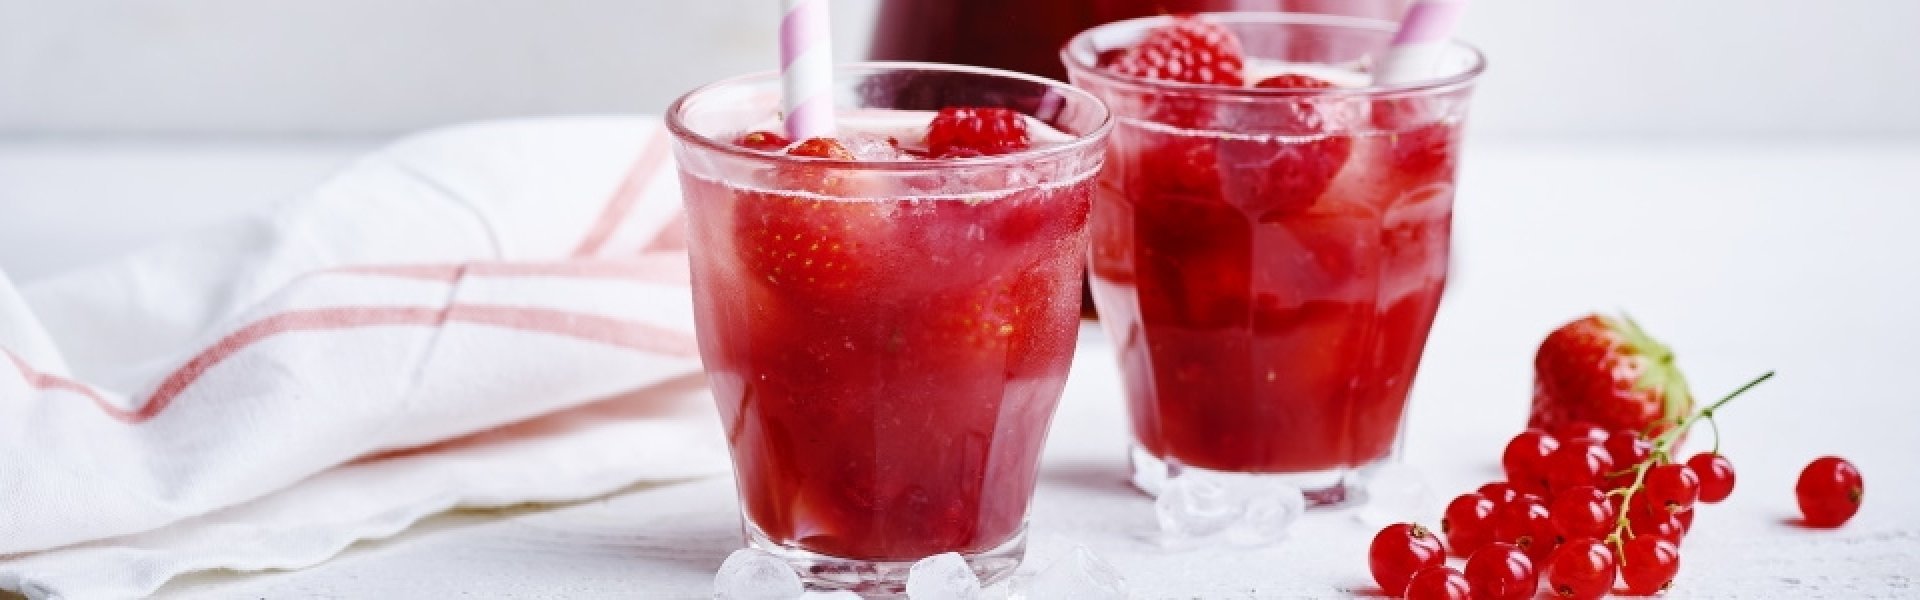 Verfrissende drankjes met fruit